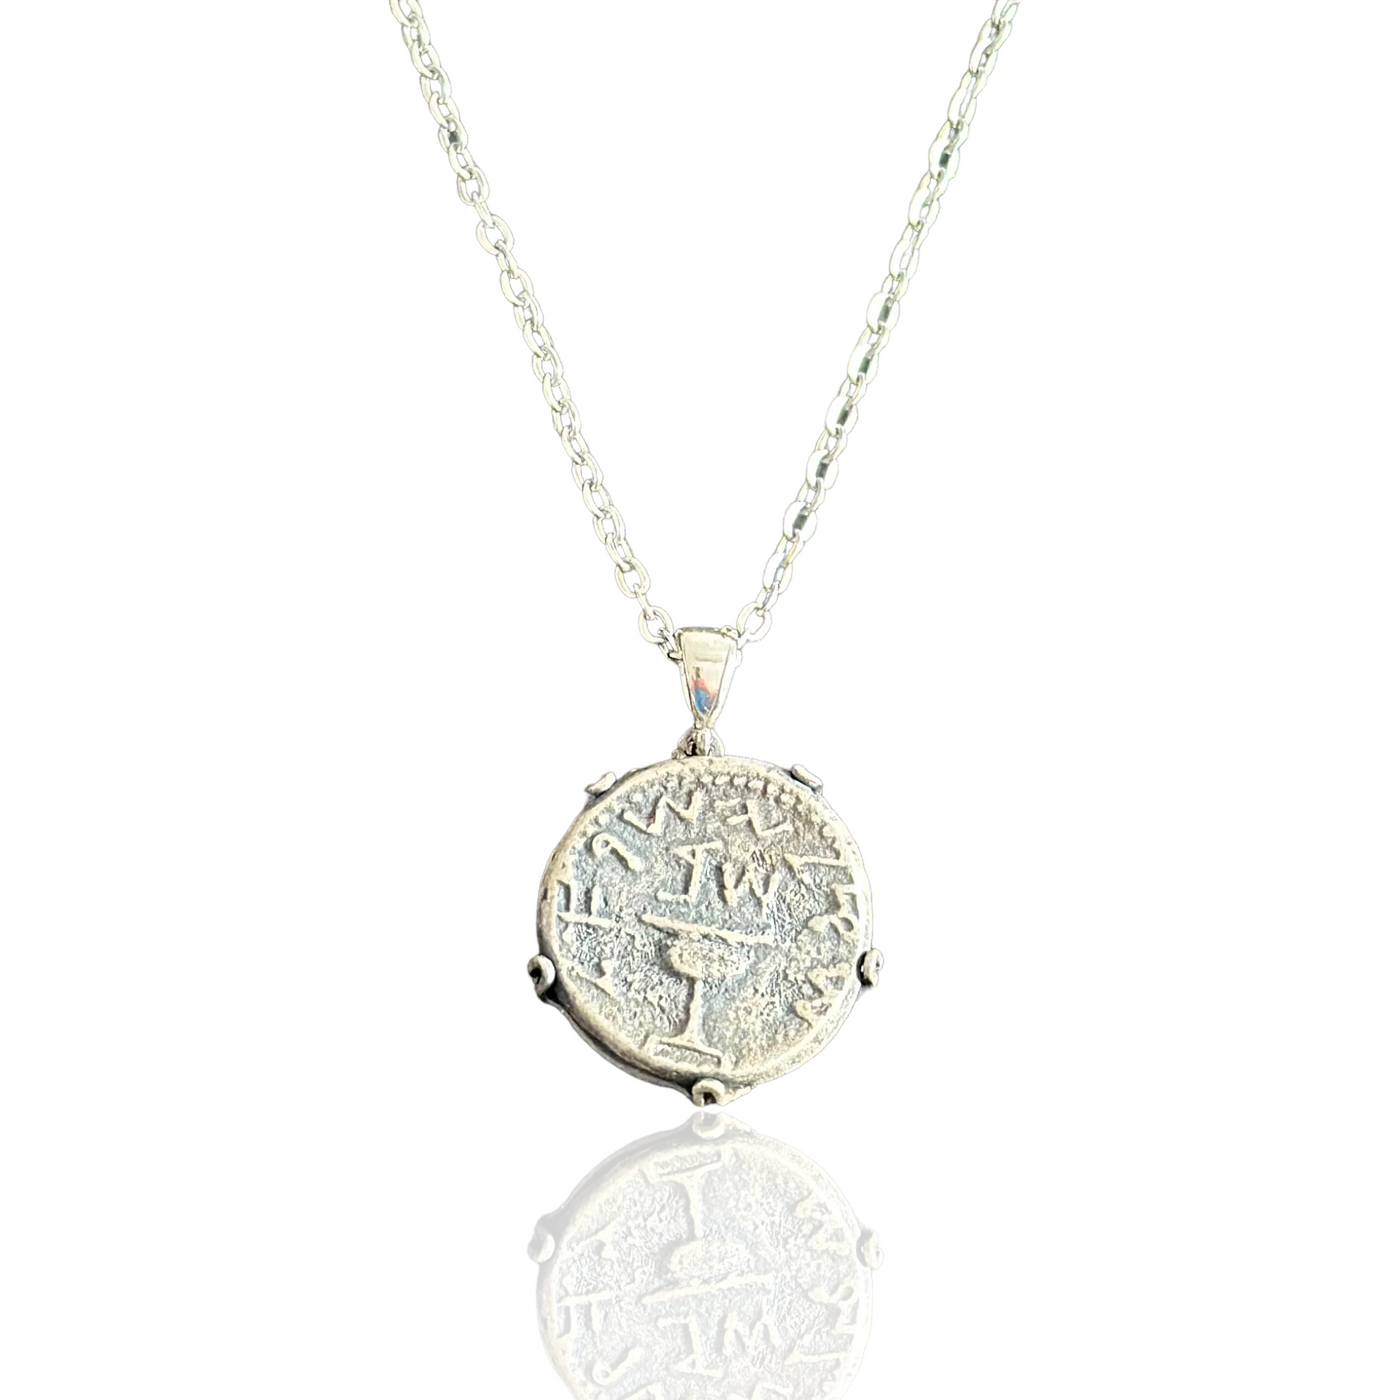 Silver Ancient Palestine Coin Replica Necklace